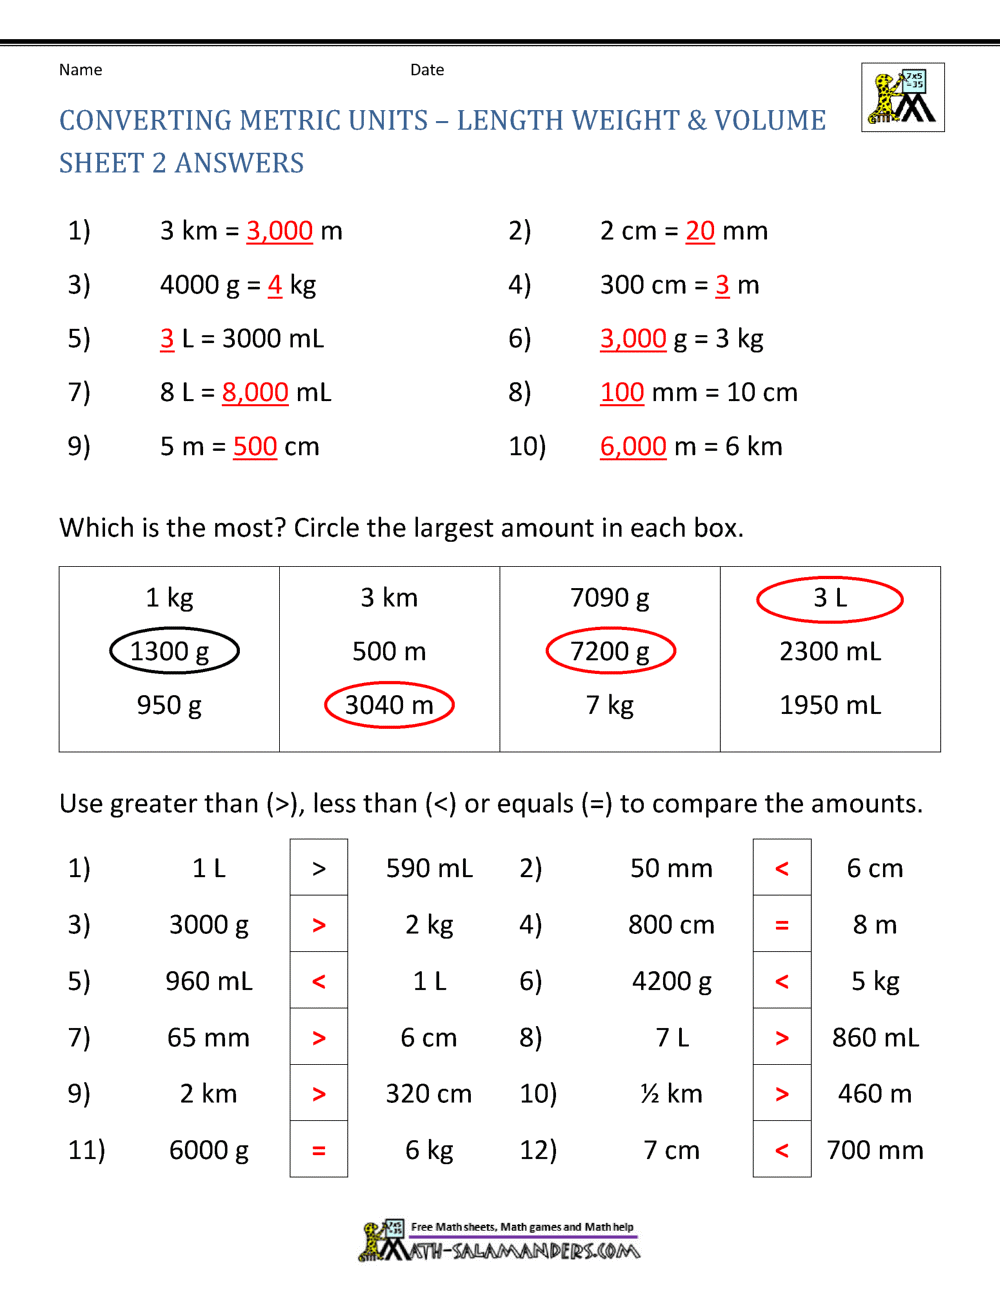 Metric Conversion Worksheet Throughout Metrics And Measurement Worksheet Answers